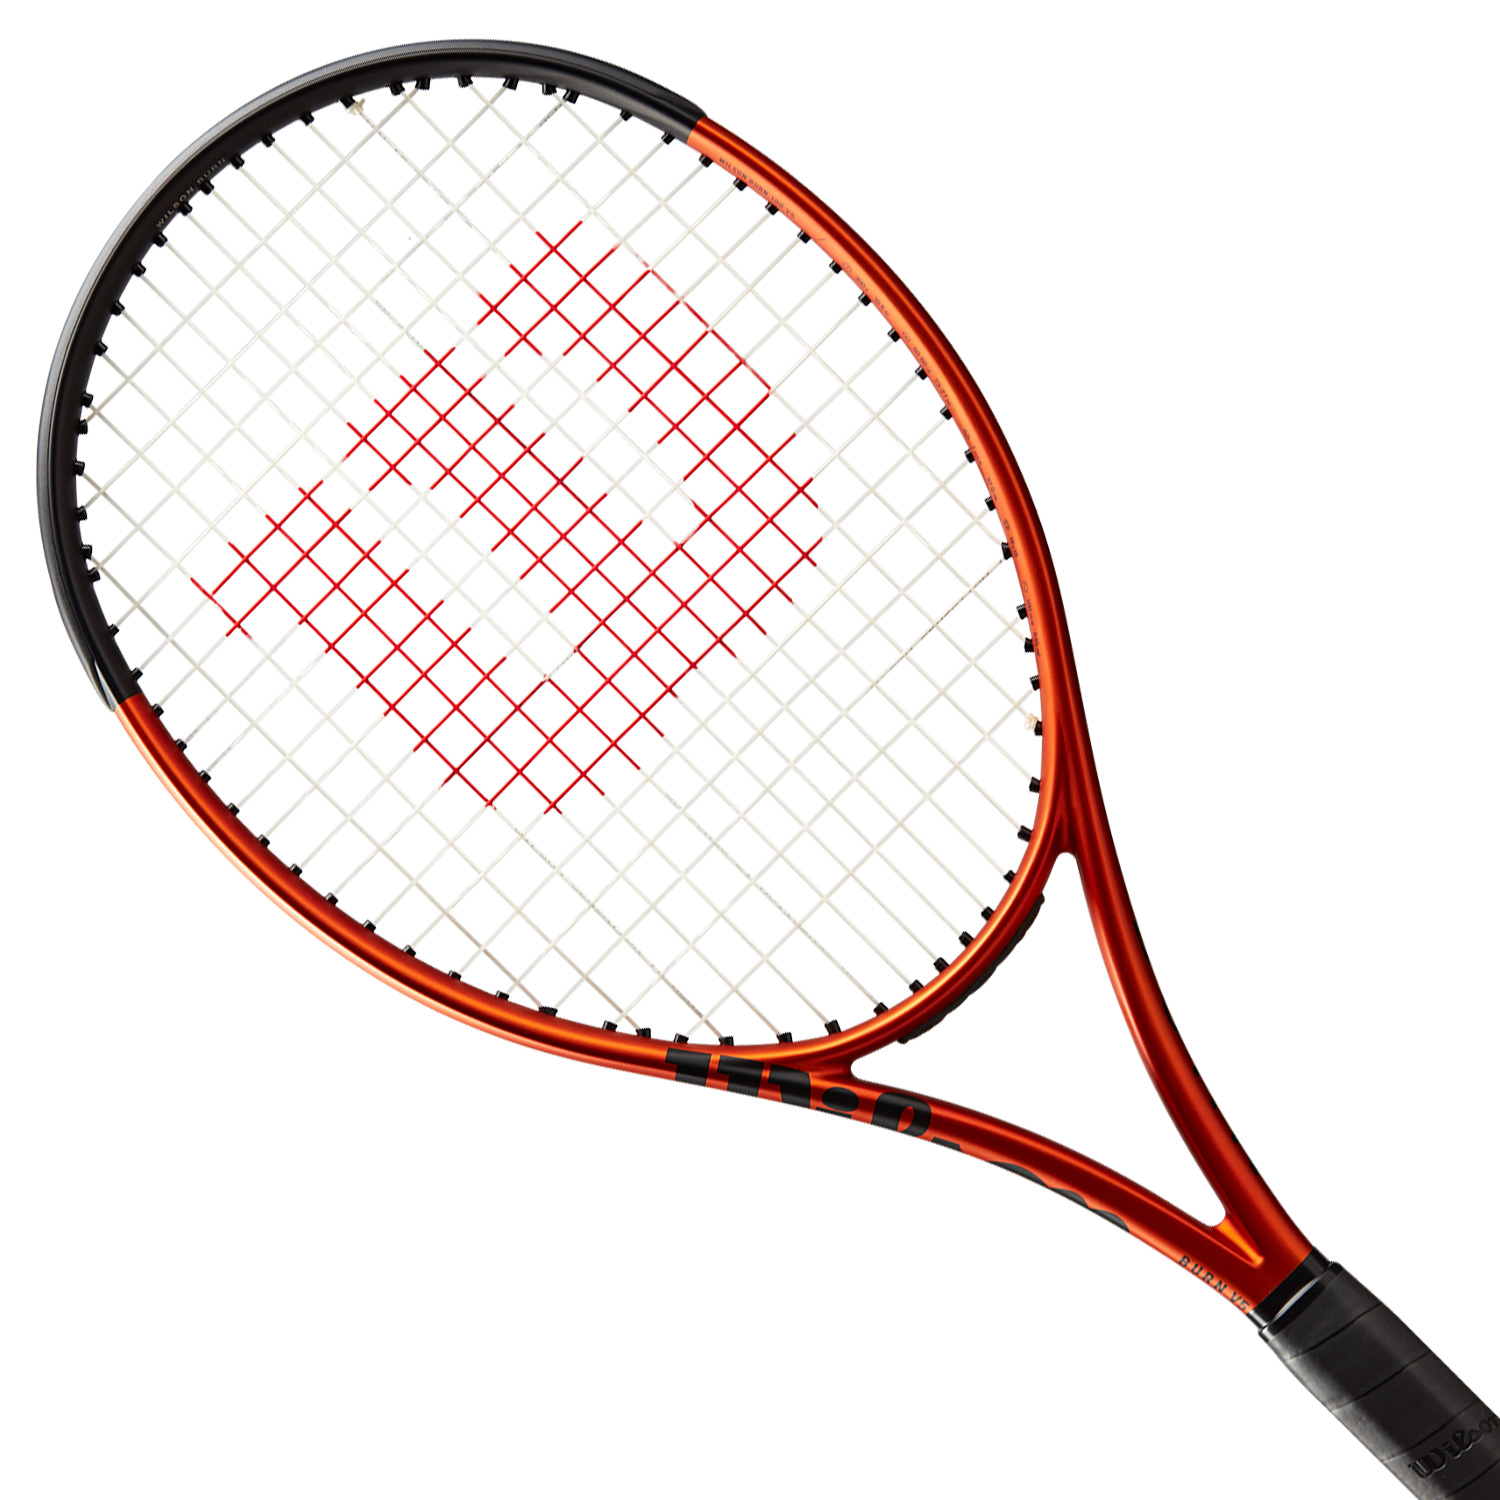 Buy tennis rackets, wilson, burn online tennis rackets Racket Kingdom